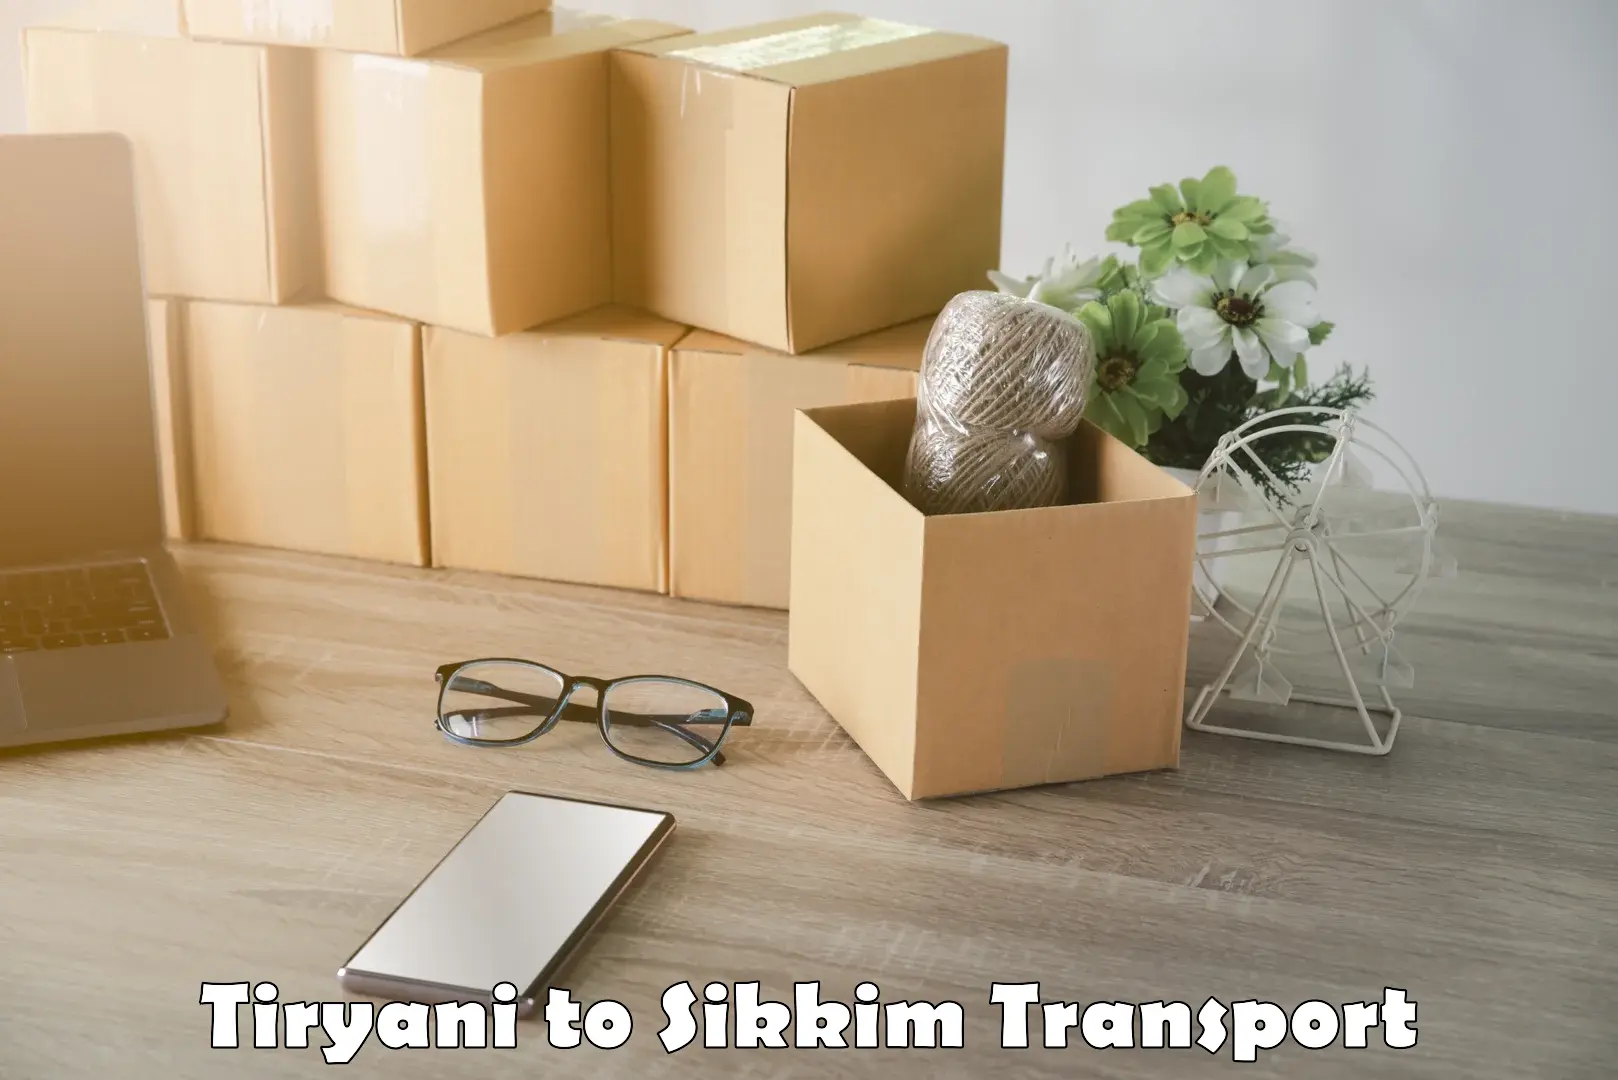 Daily transport service Tiryani to Pelling